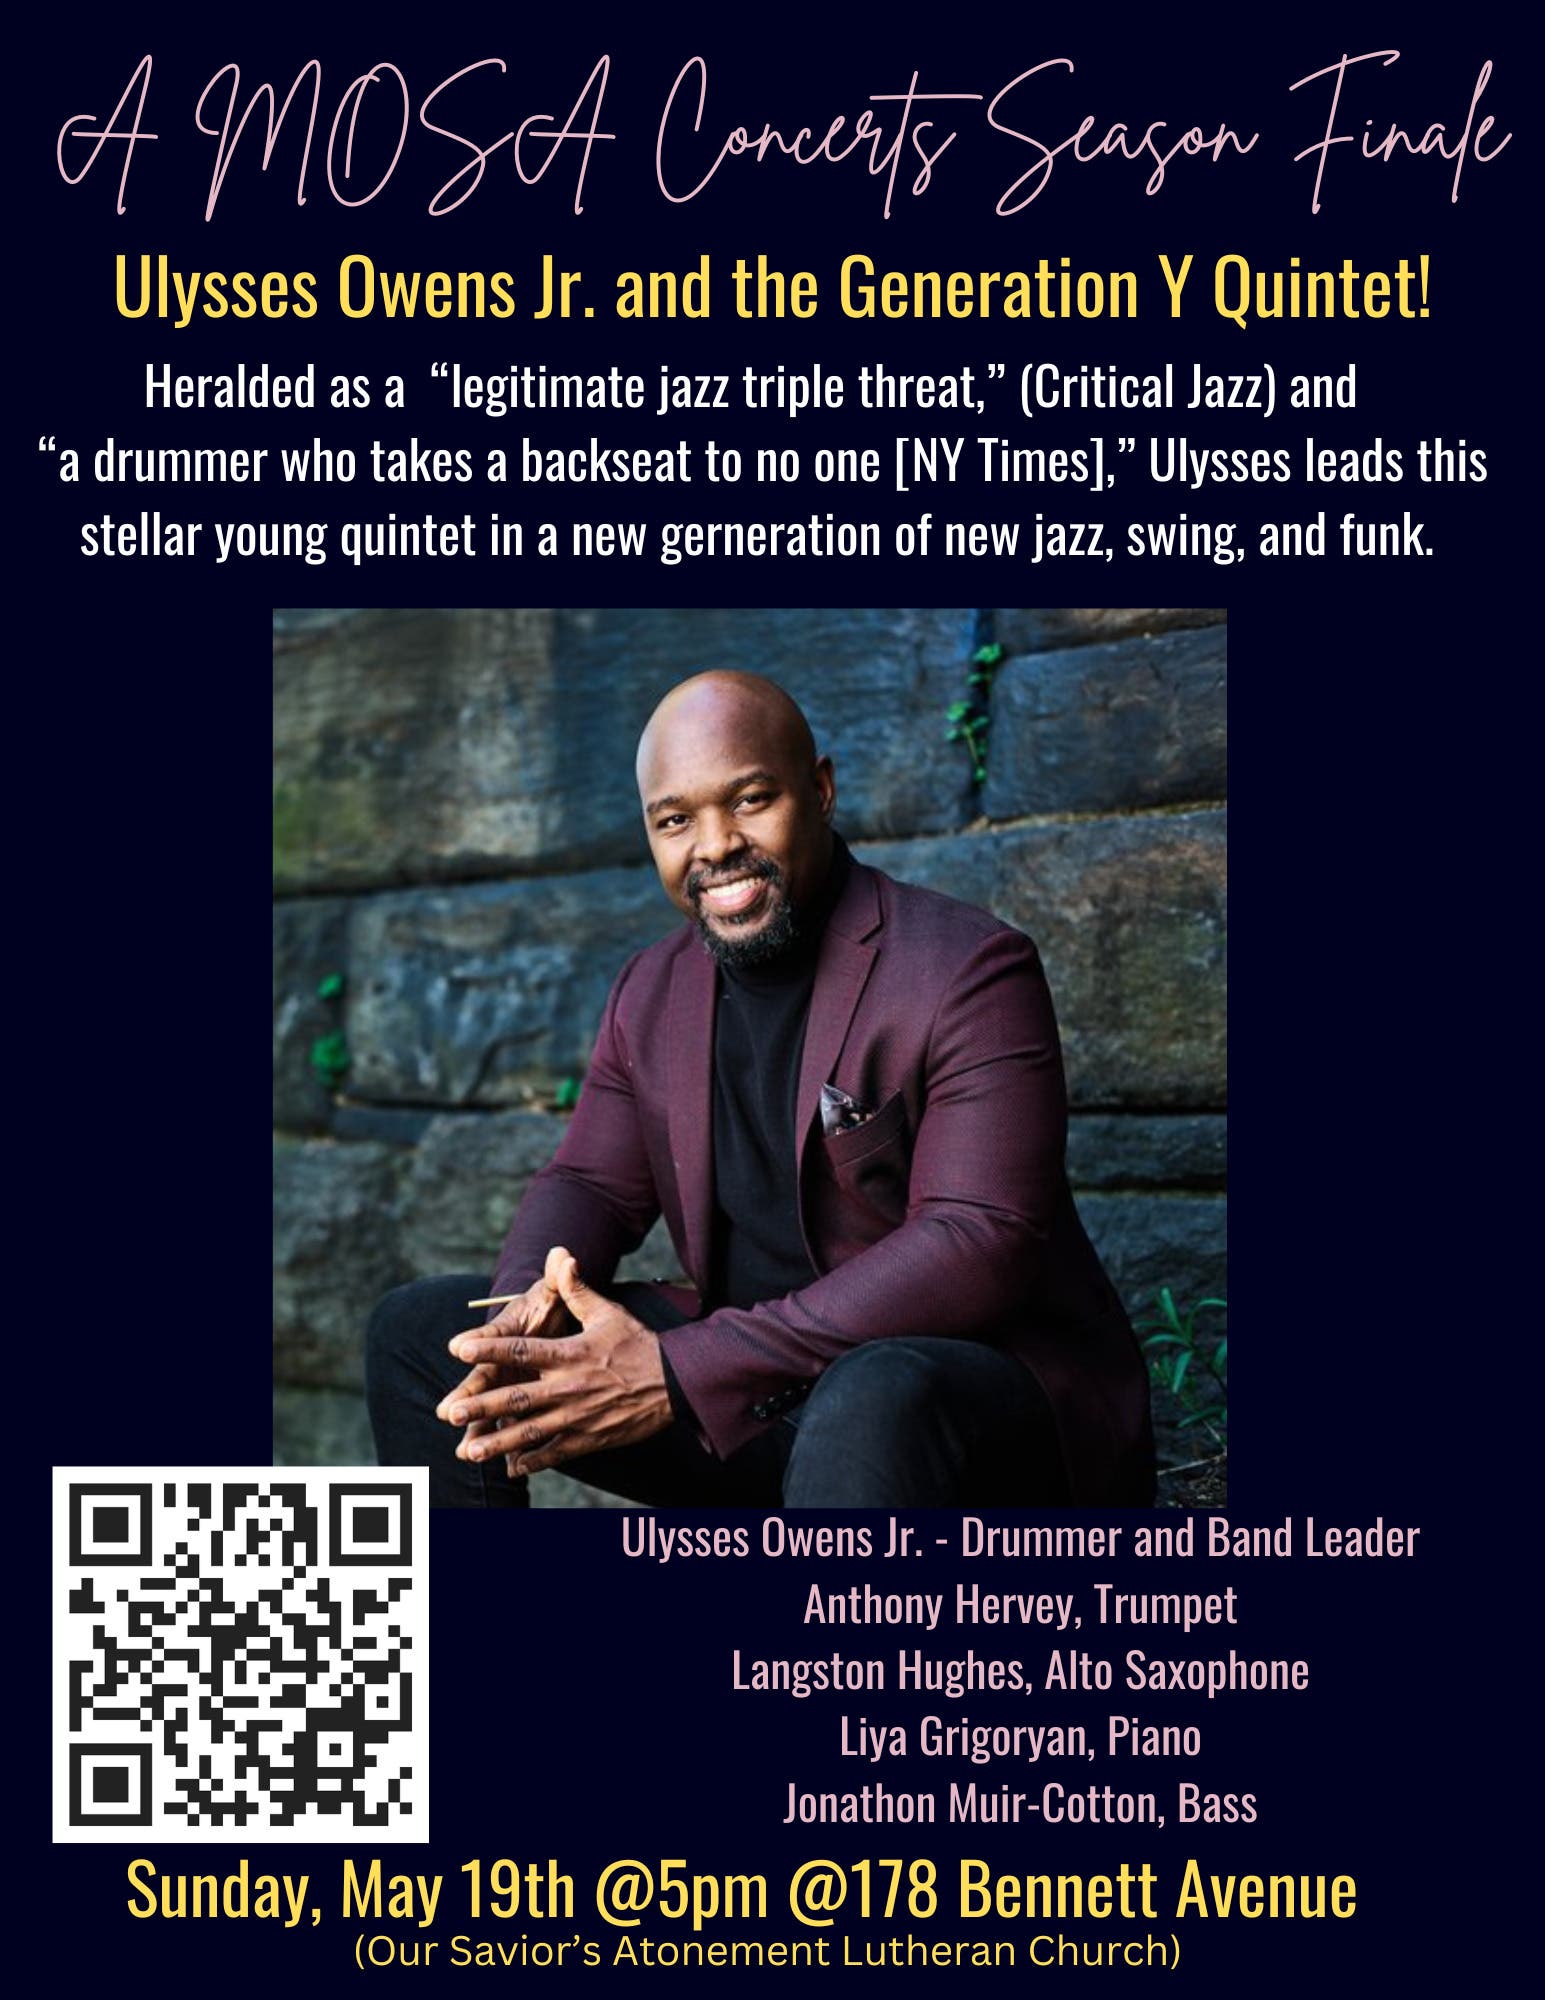 MOSA Concerts Season Finale! Jazz Drummer Ulysses Owens Jr and the Generation Y Quintet